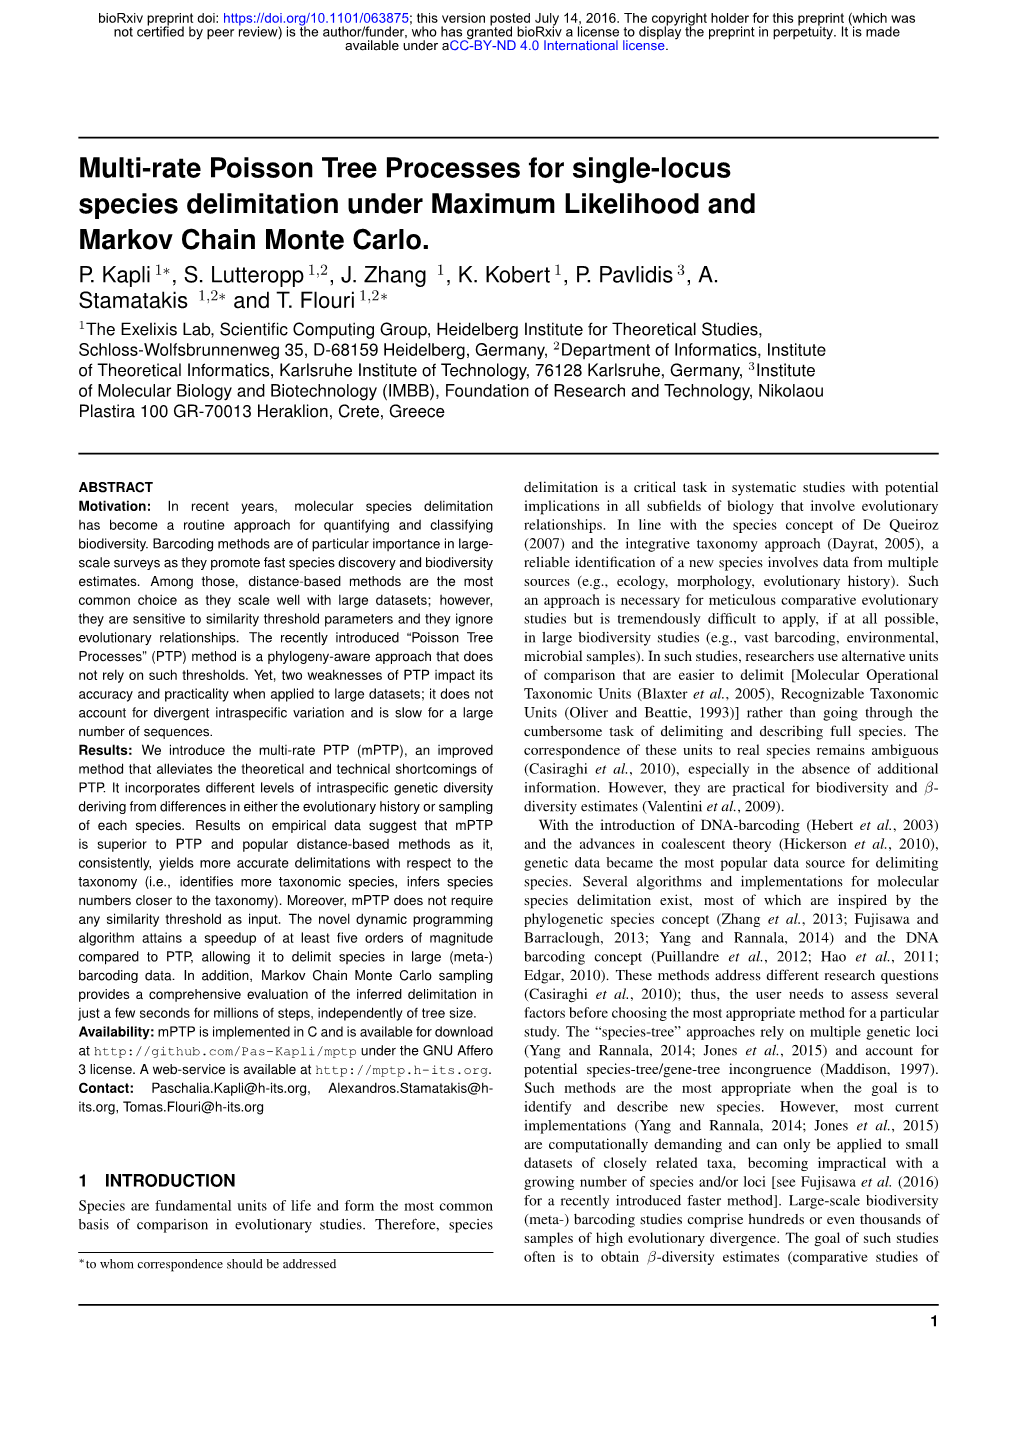 Multi-Rate Poisson Tree Processes for Single-Locus Species Delimitation Under Maximum Likelihood and Markov Chain Monte Carlo